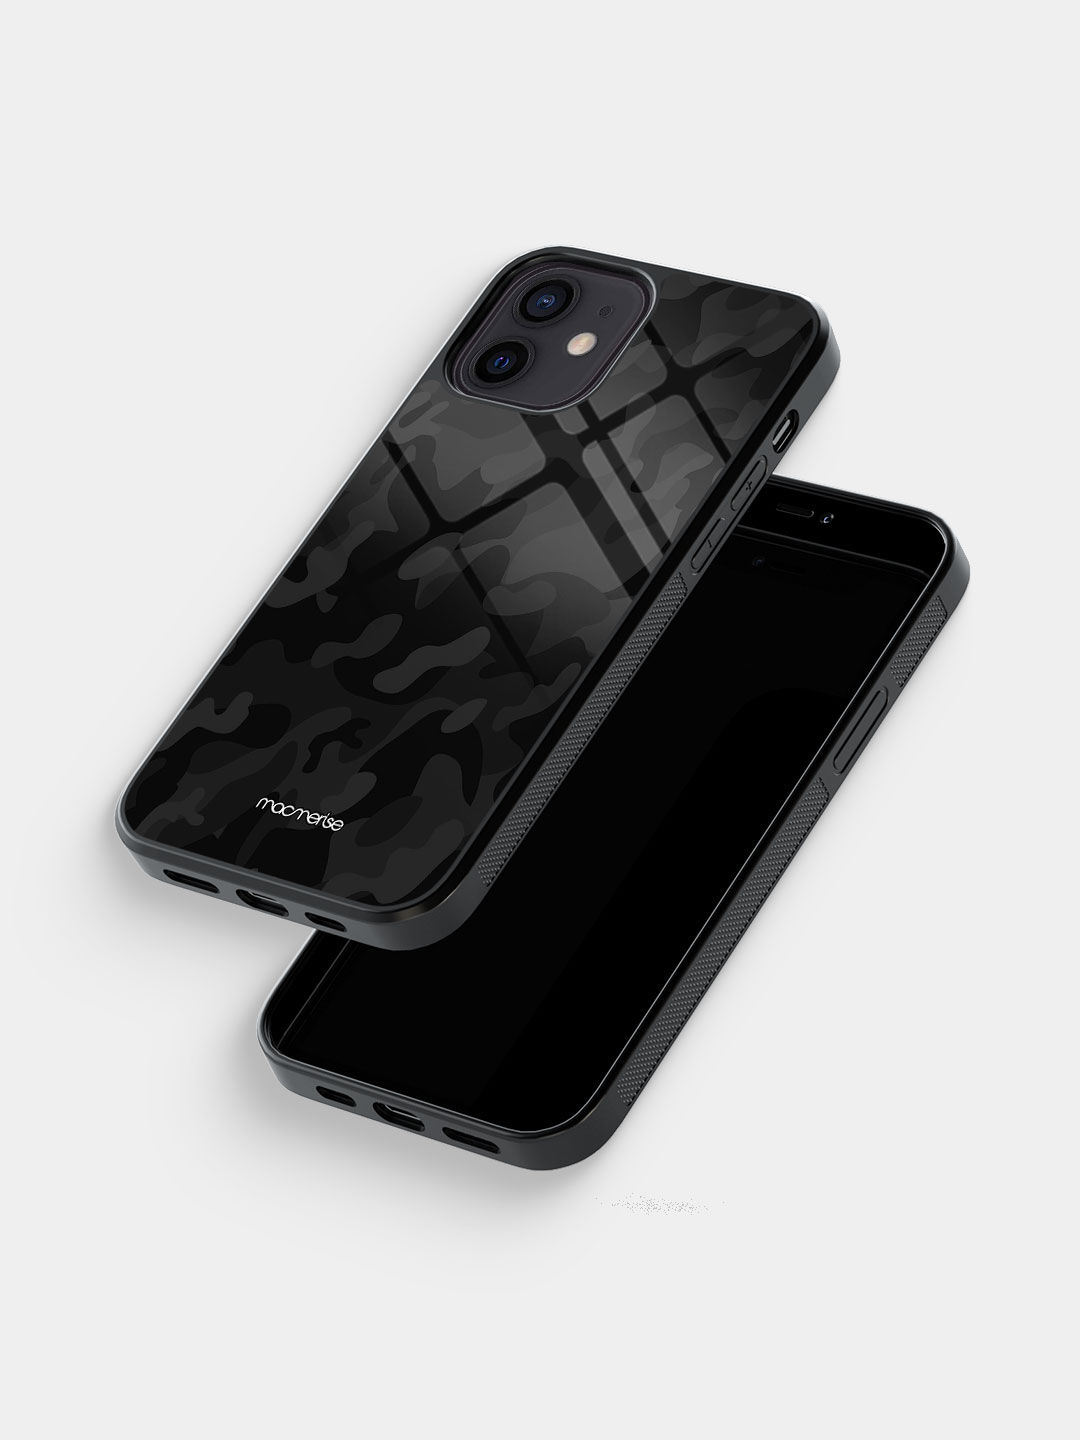 Buy Camo Black Macmerise Sleek Case for iPhone 11 Online